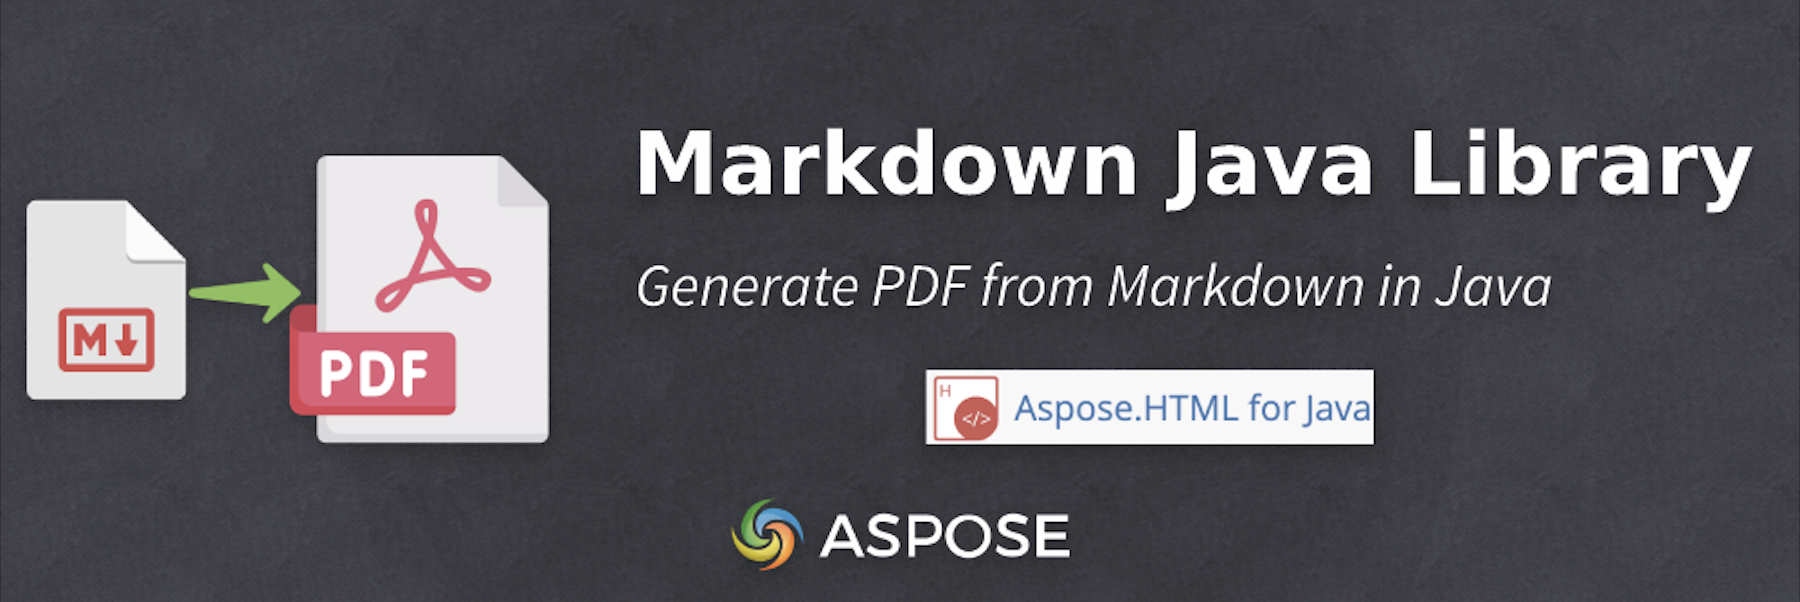 Gere PDF de Markdown em Java - Markdown para PDF